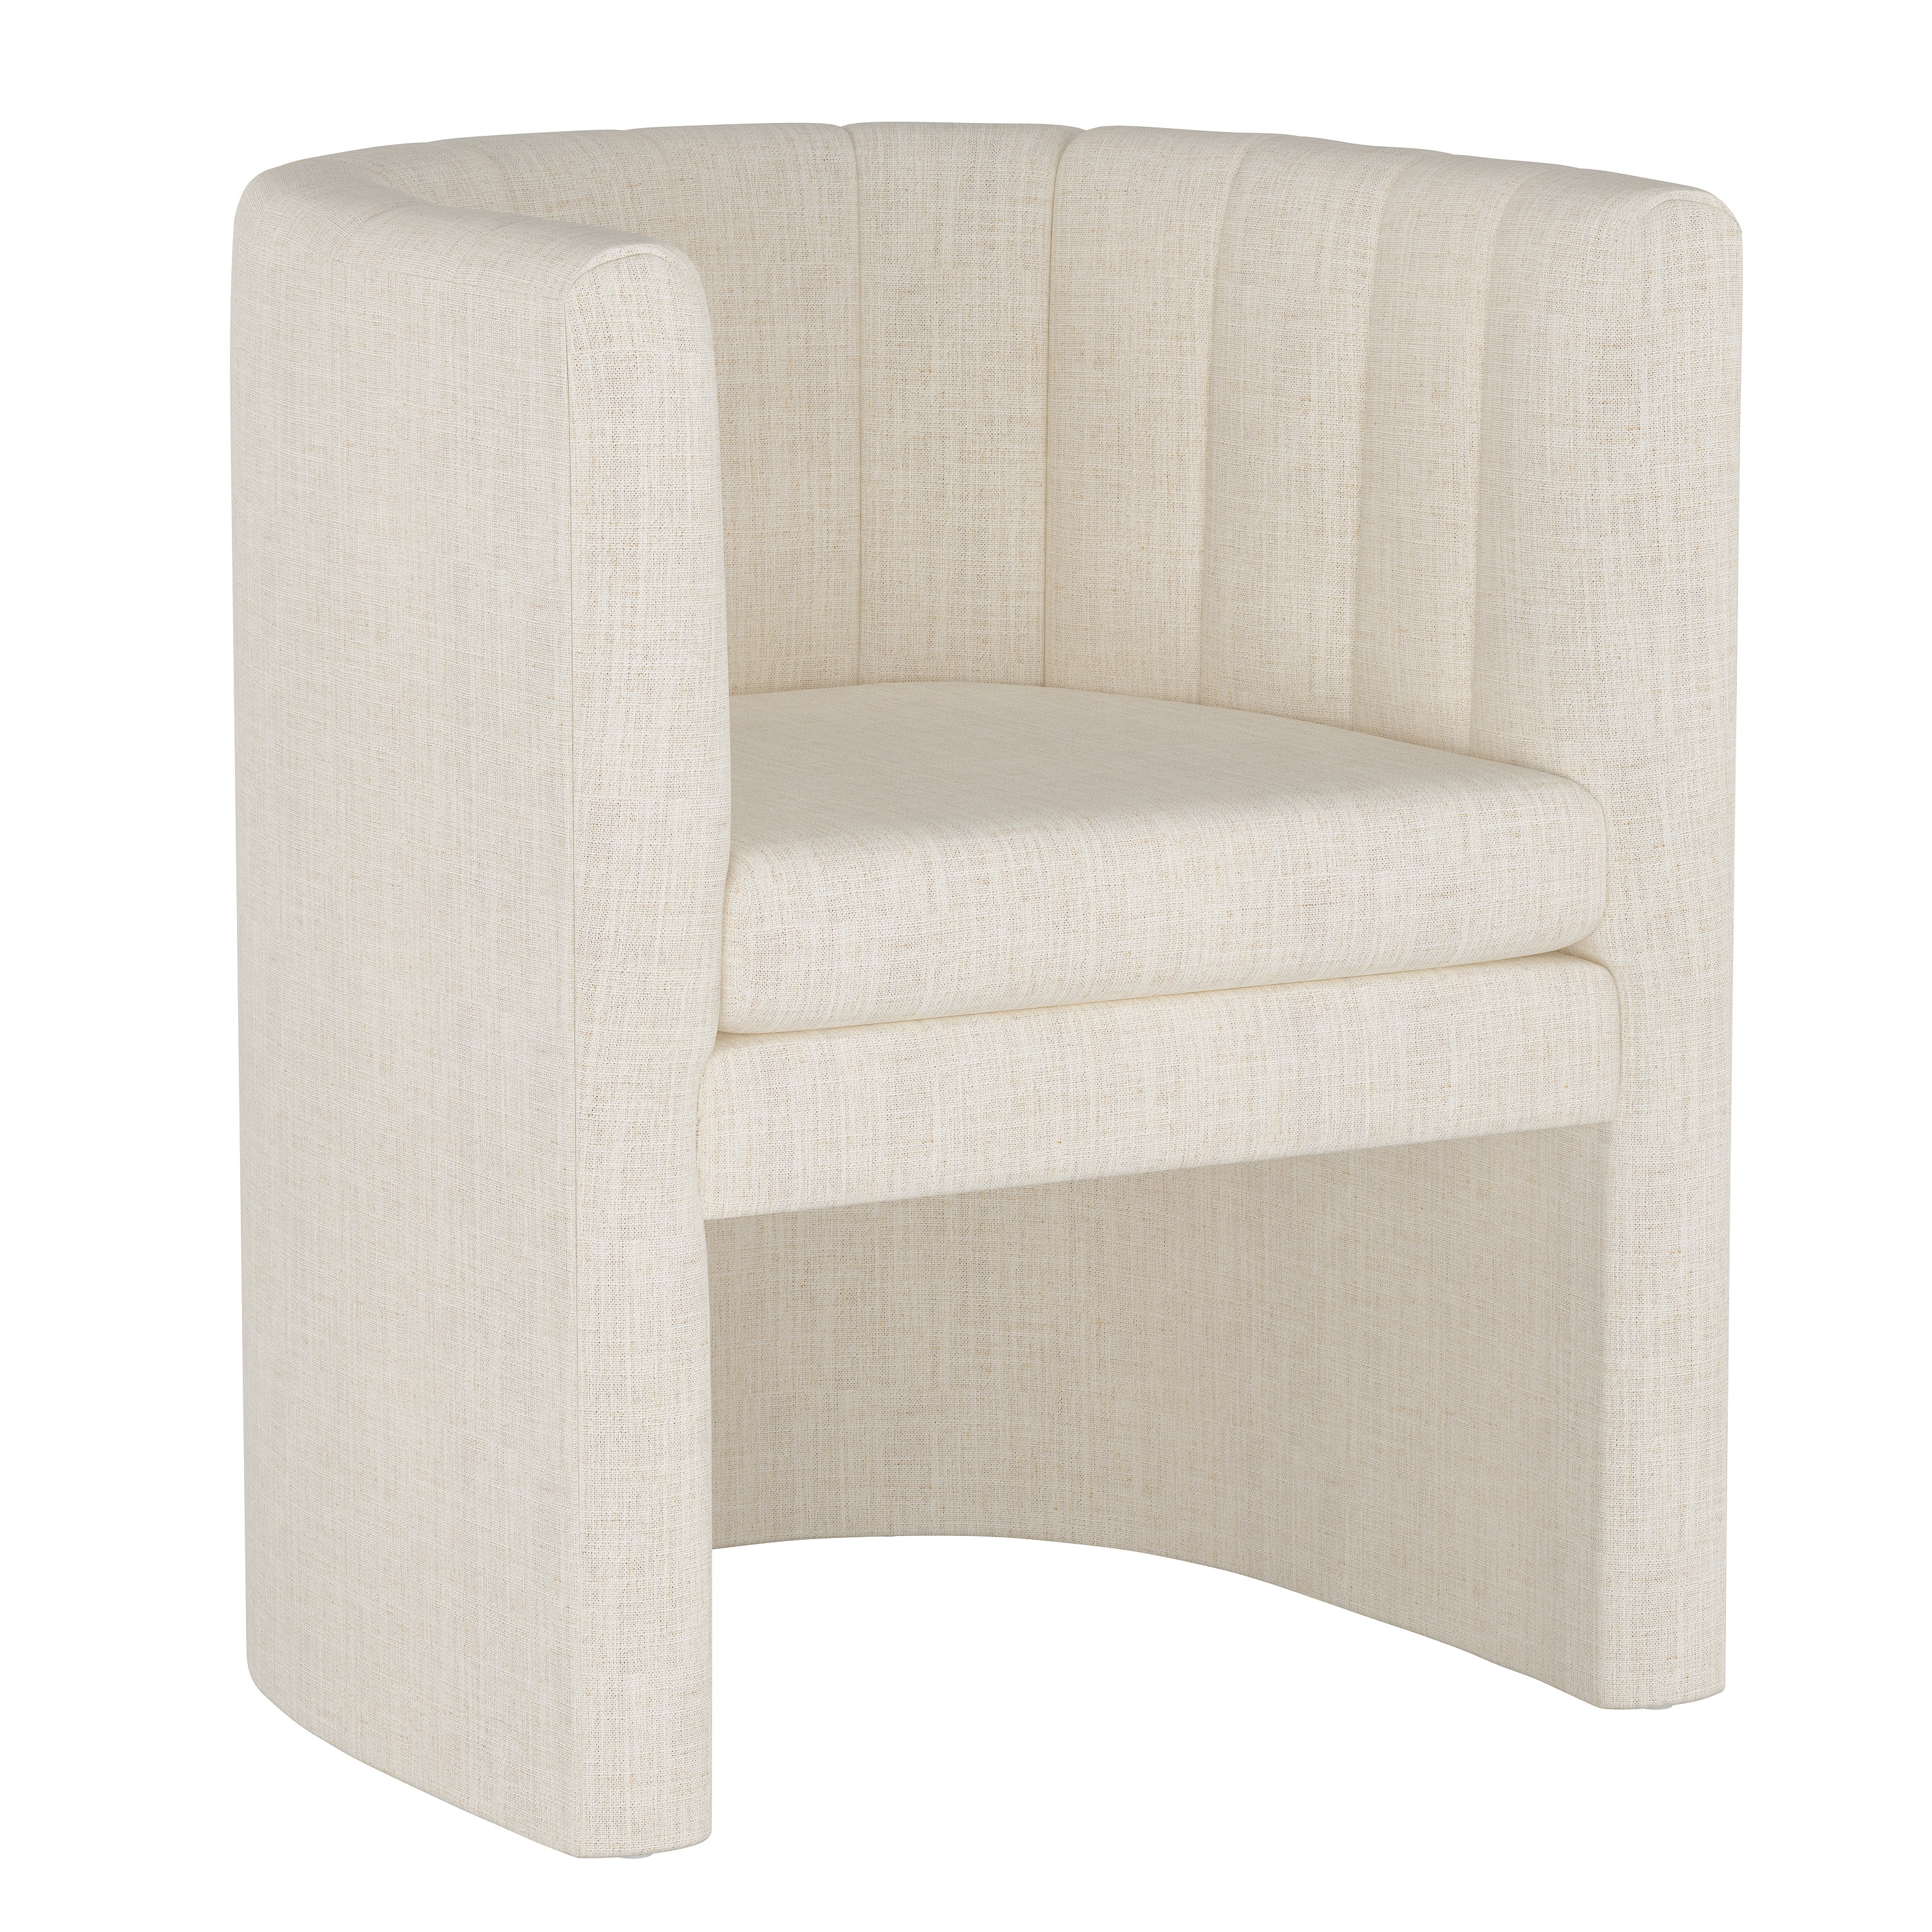 Wellshire Chair, Talc Linen - Image 0